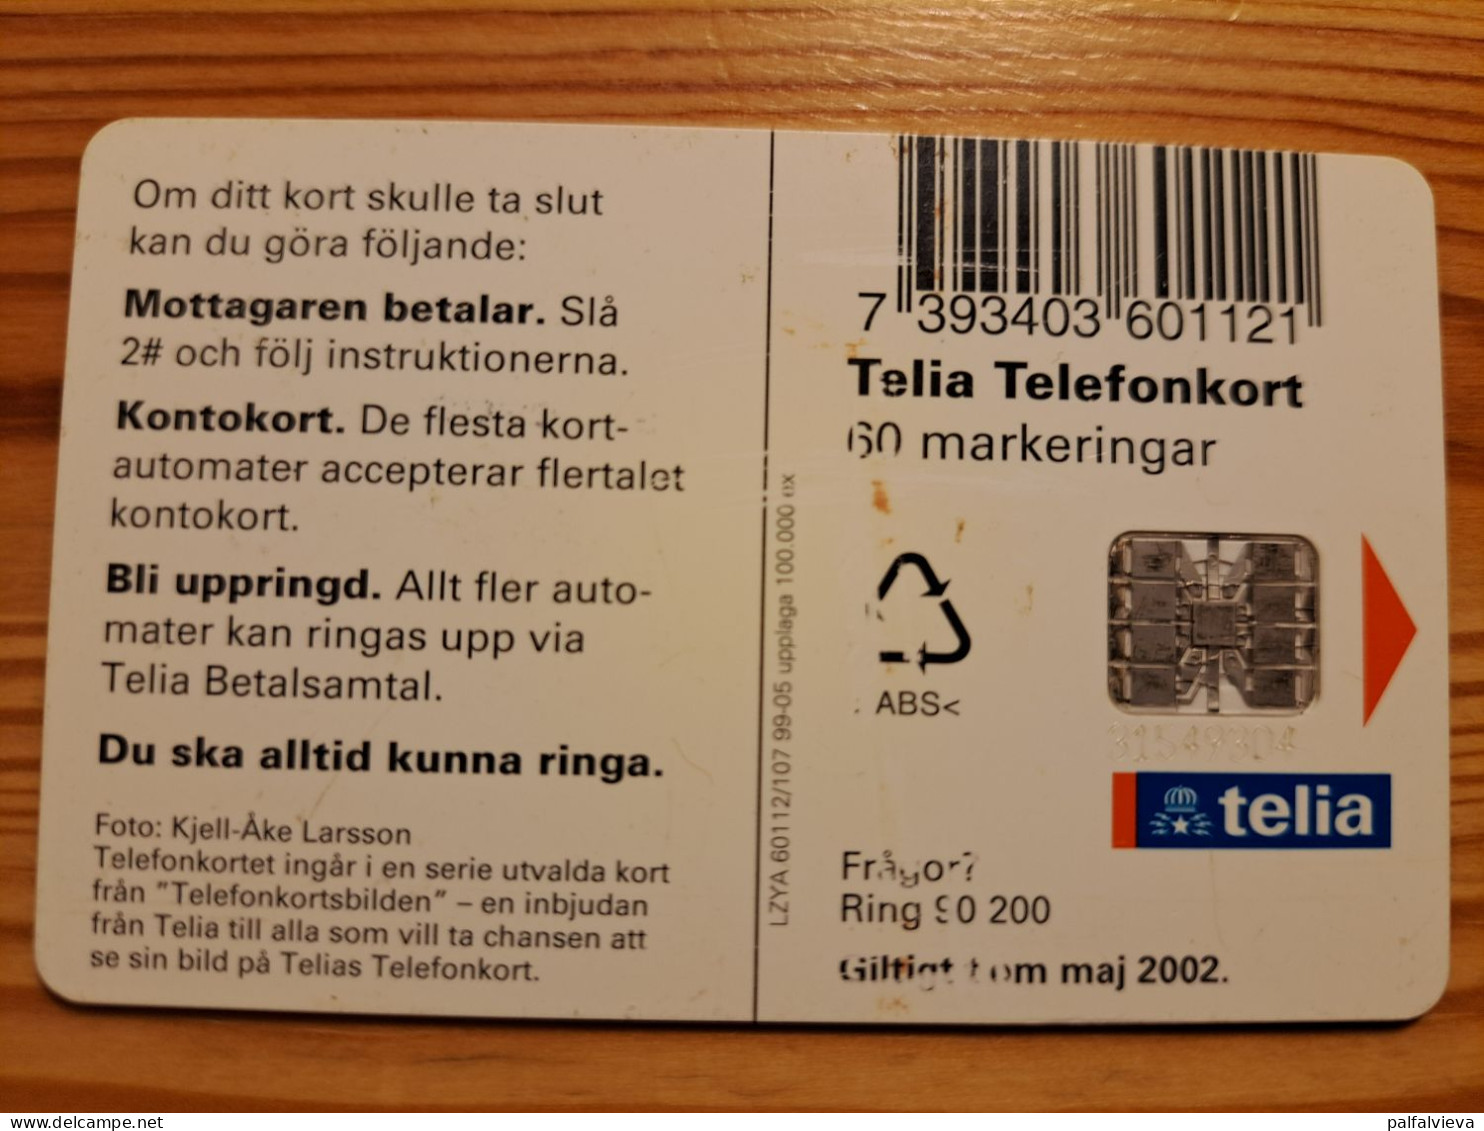 Phonecard Sweden - Cow - Svezia